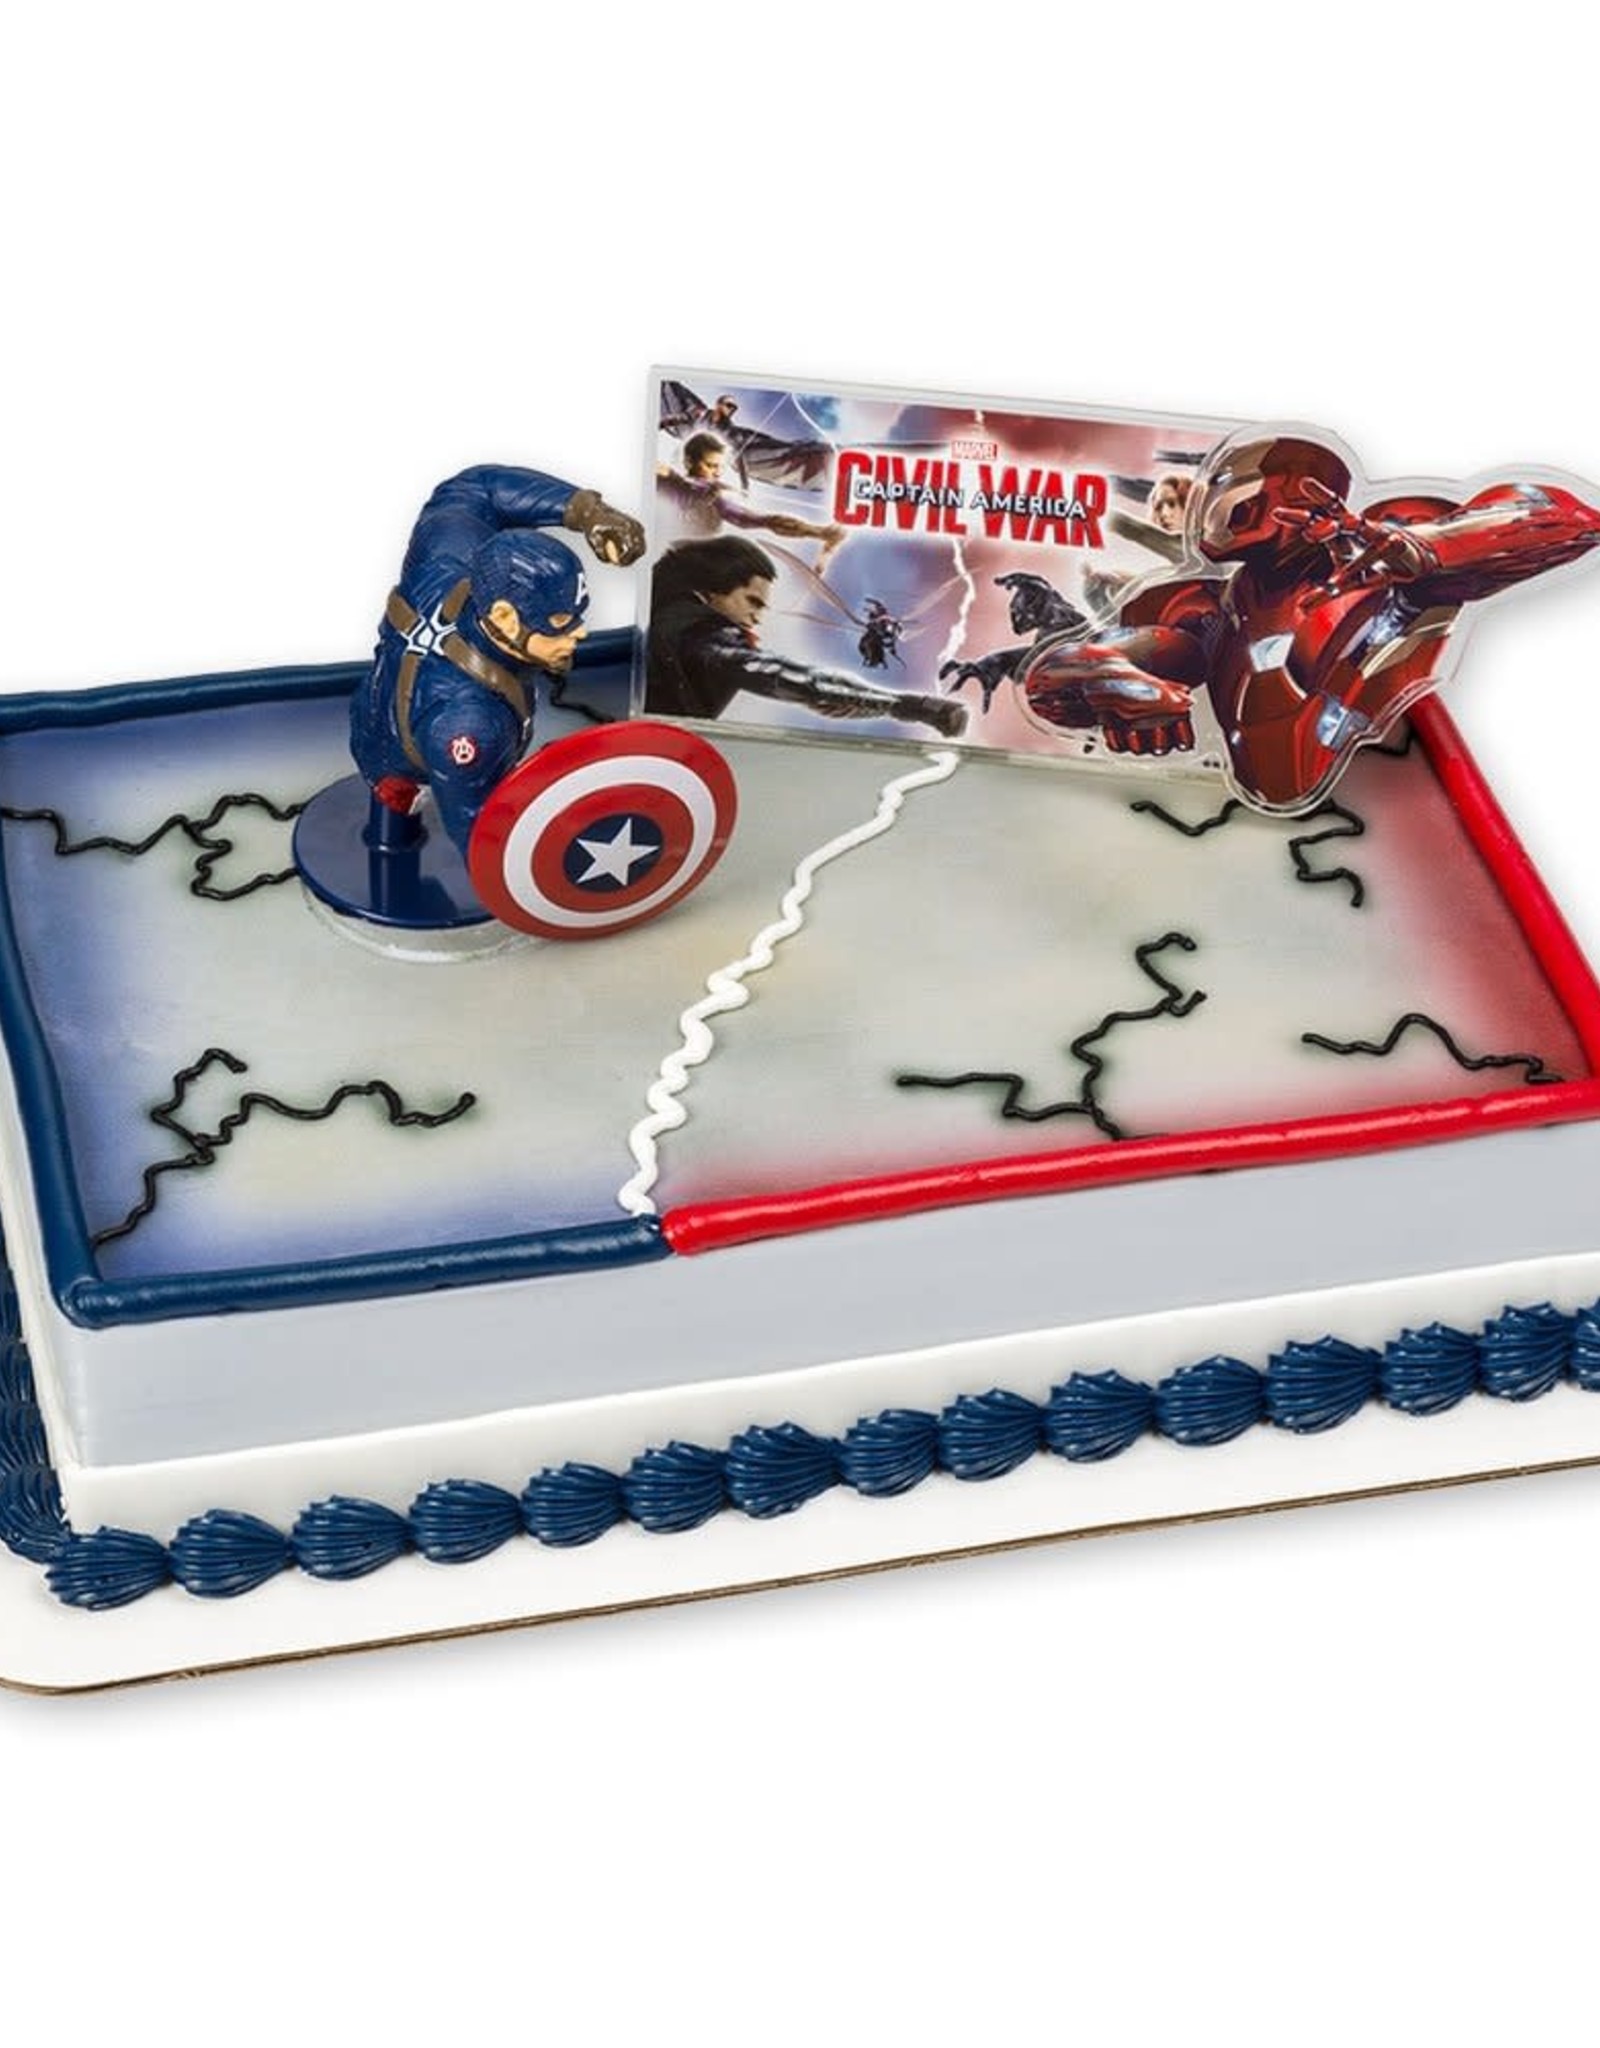 Captain America Civil War DecoSet Cake Topper